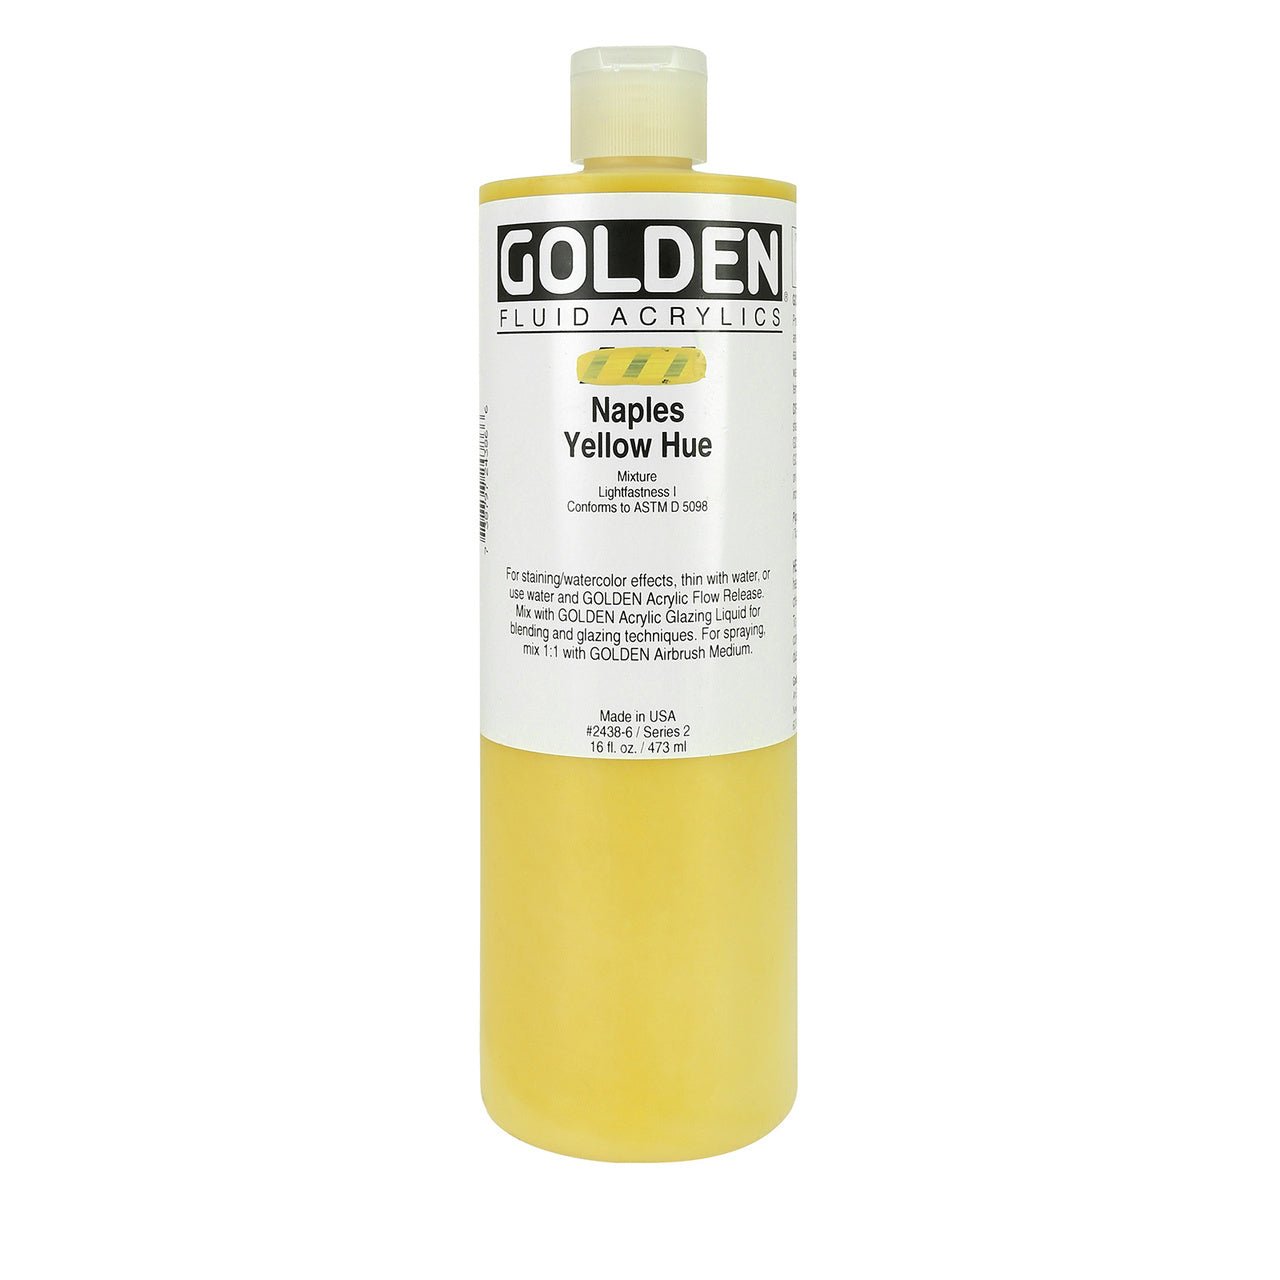 Golden Fluid Acrylic Naples Yellow Hue 16 oz - merriartist.com